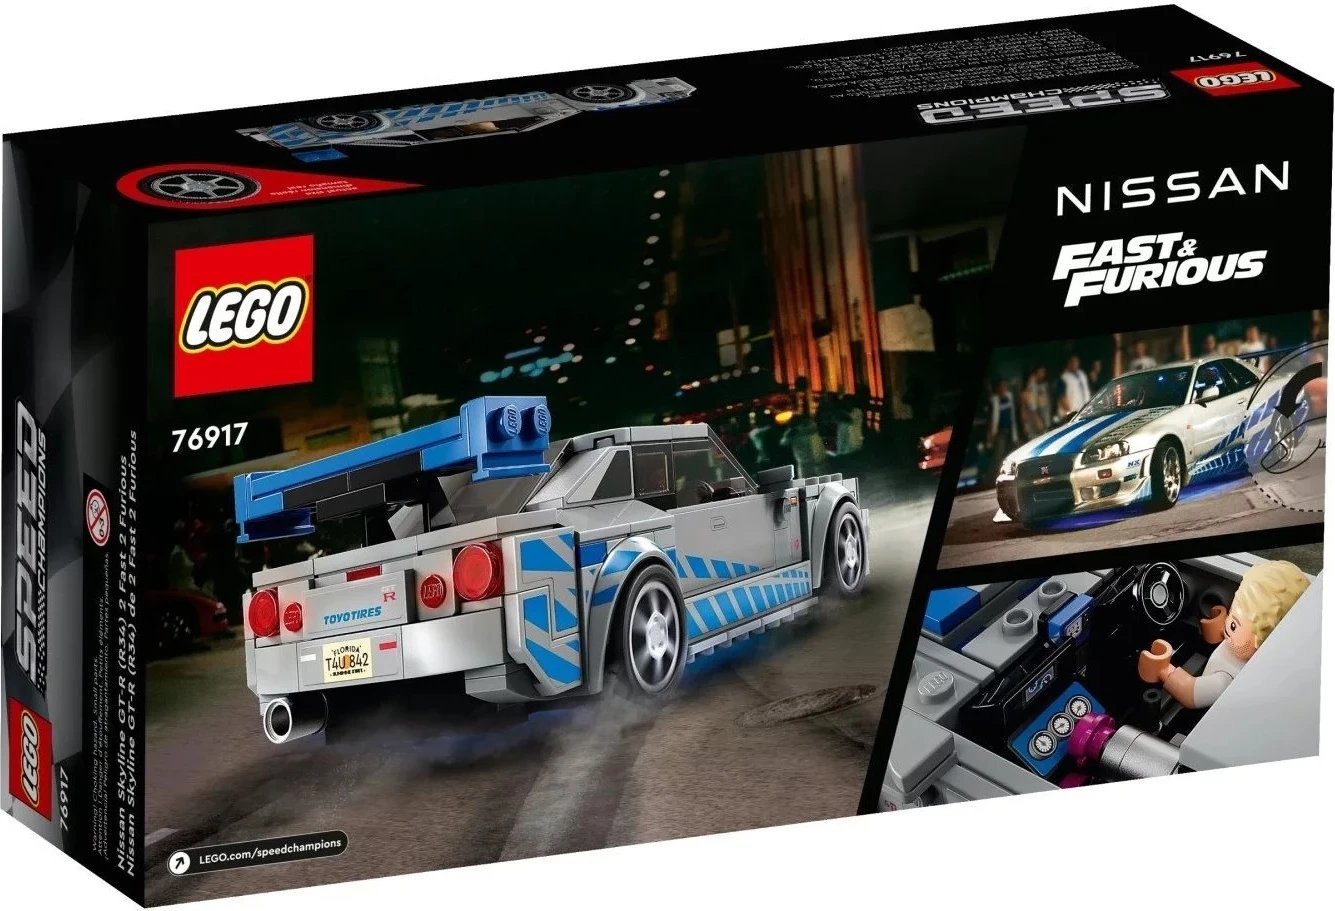 Set lodër Lego, Speed Champions 76917